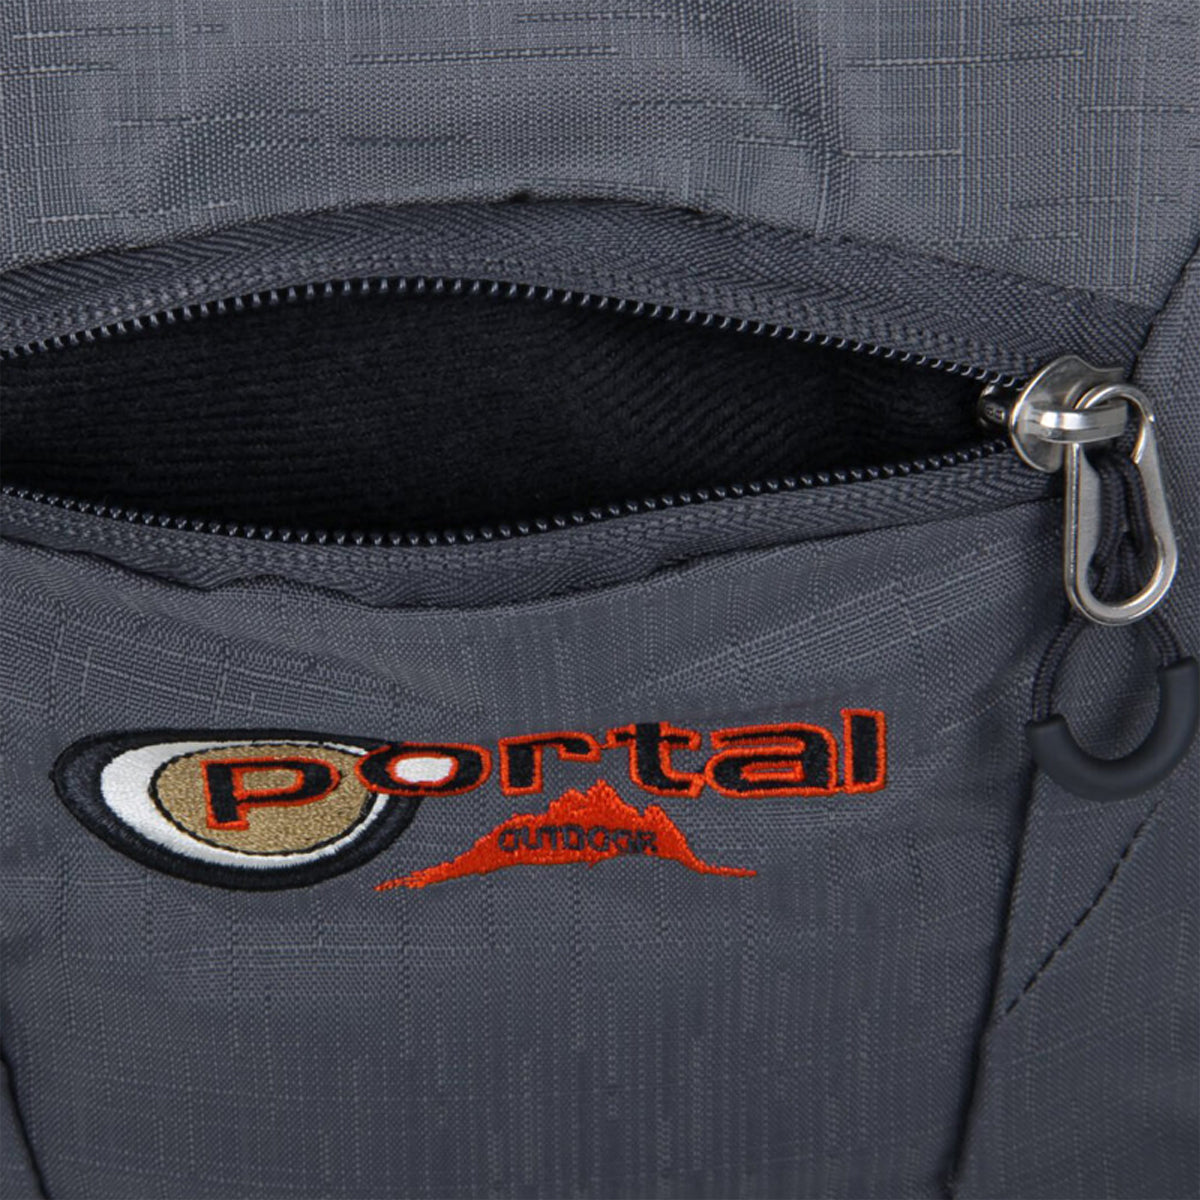 Pavo 22 Backpack - Portal Outdoor UK